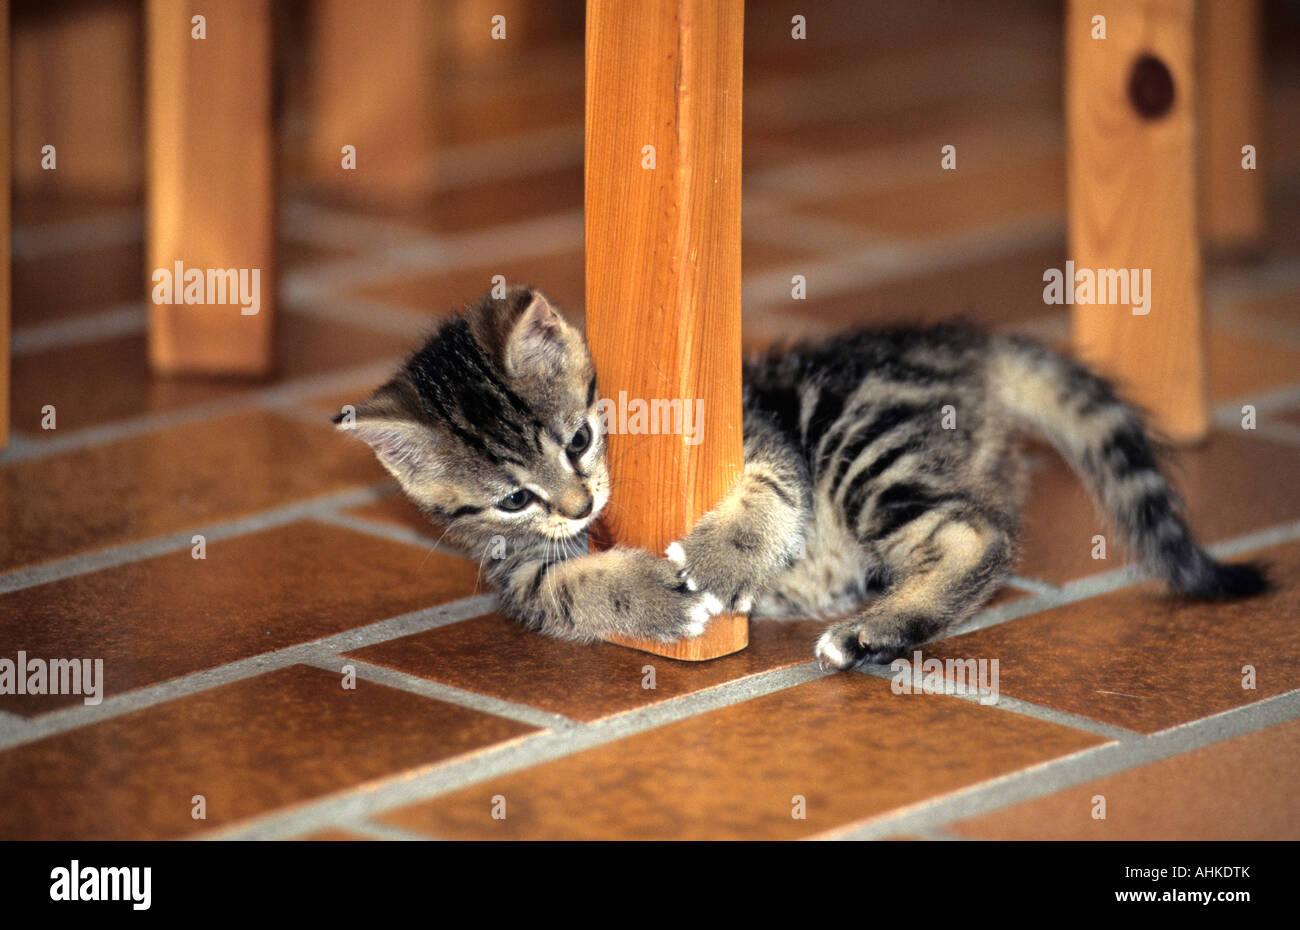 getigerte Hauskatze Jungtier spielend mit Stuhlbein drinnen tabby domestic cat kitten playing with chair leg inside indoor Stock Photo